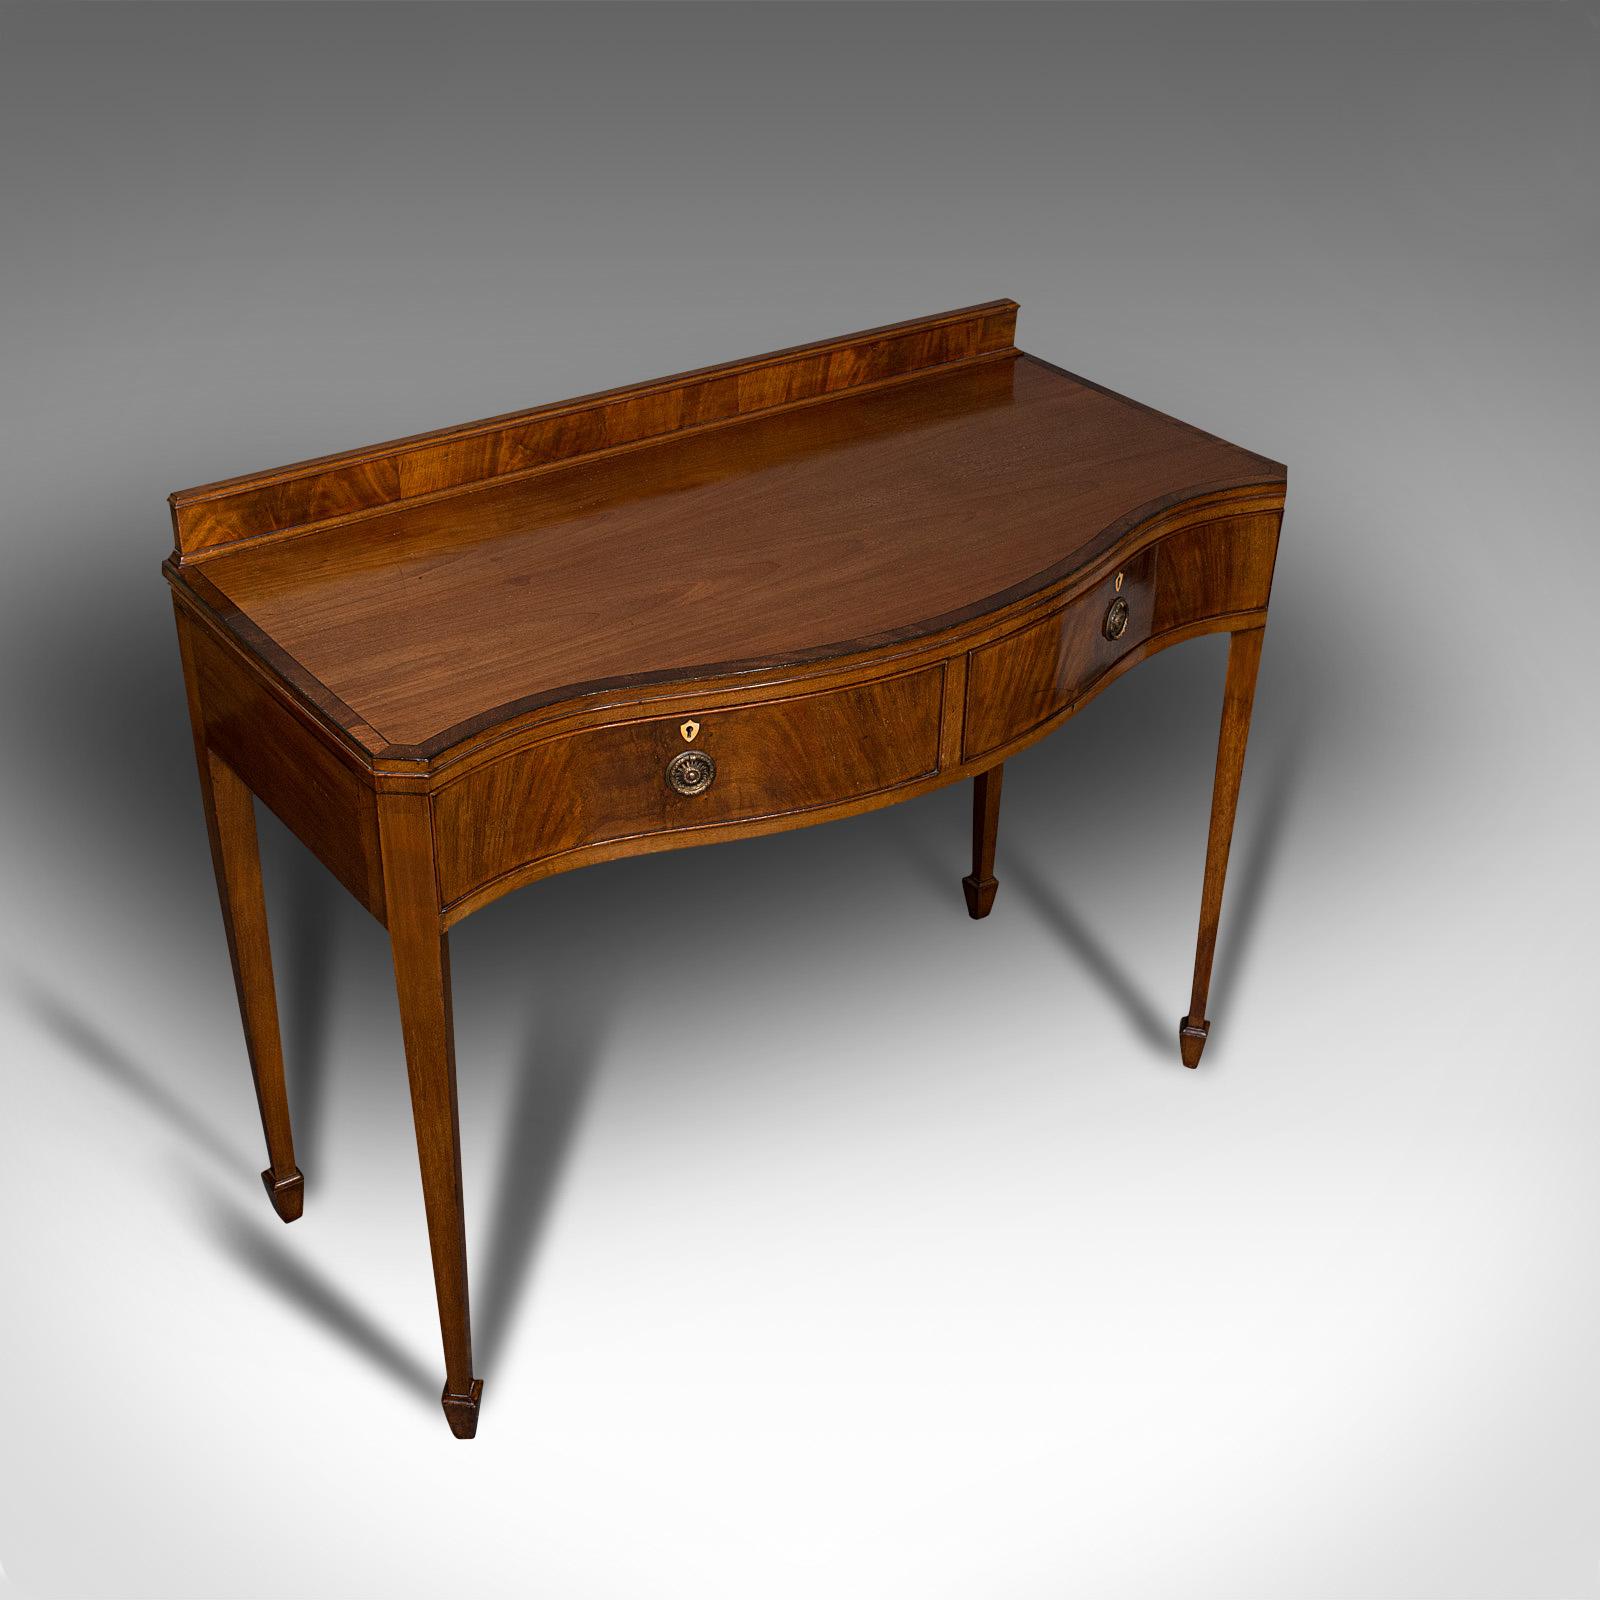 Antique Side Table, English, Mahogany, Buffet, Server, Hamptons, Edwardian, 1910 For Sale 2